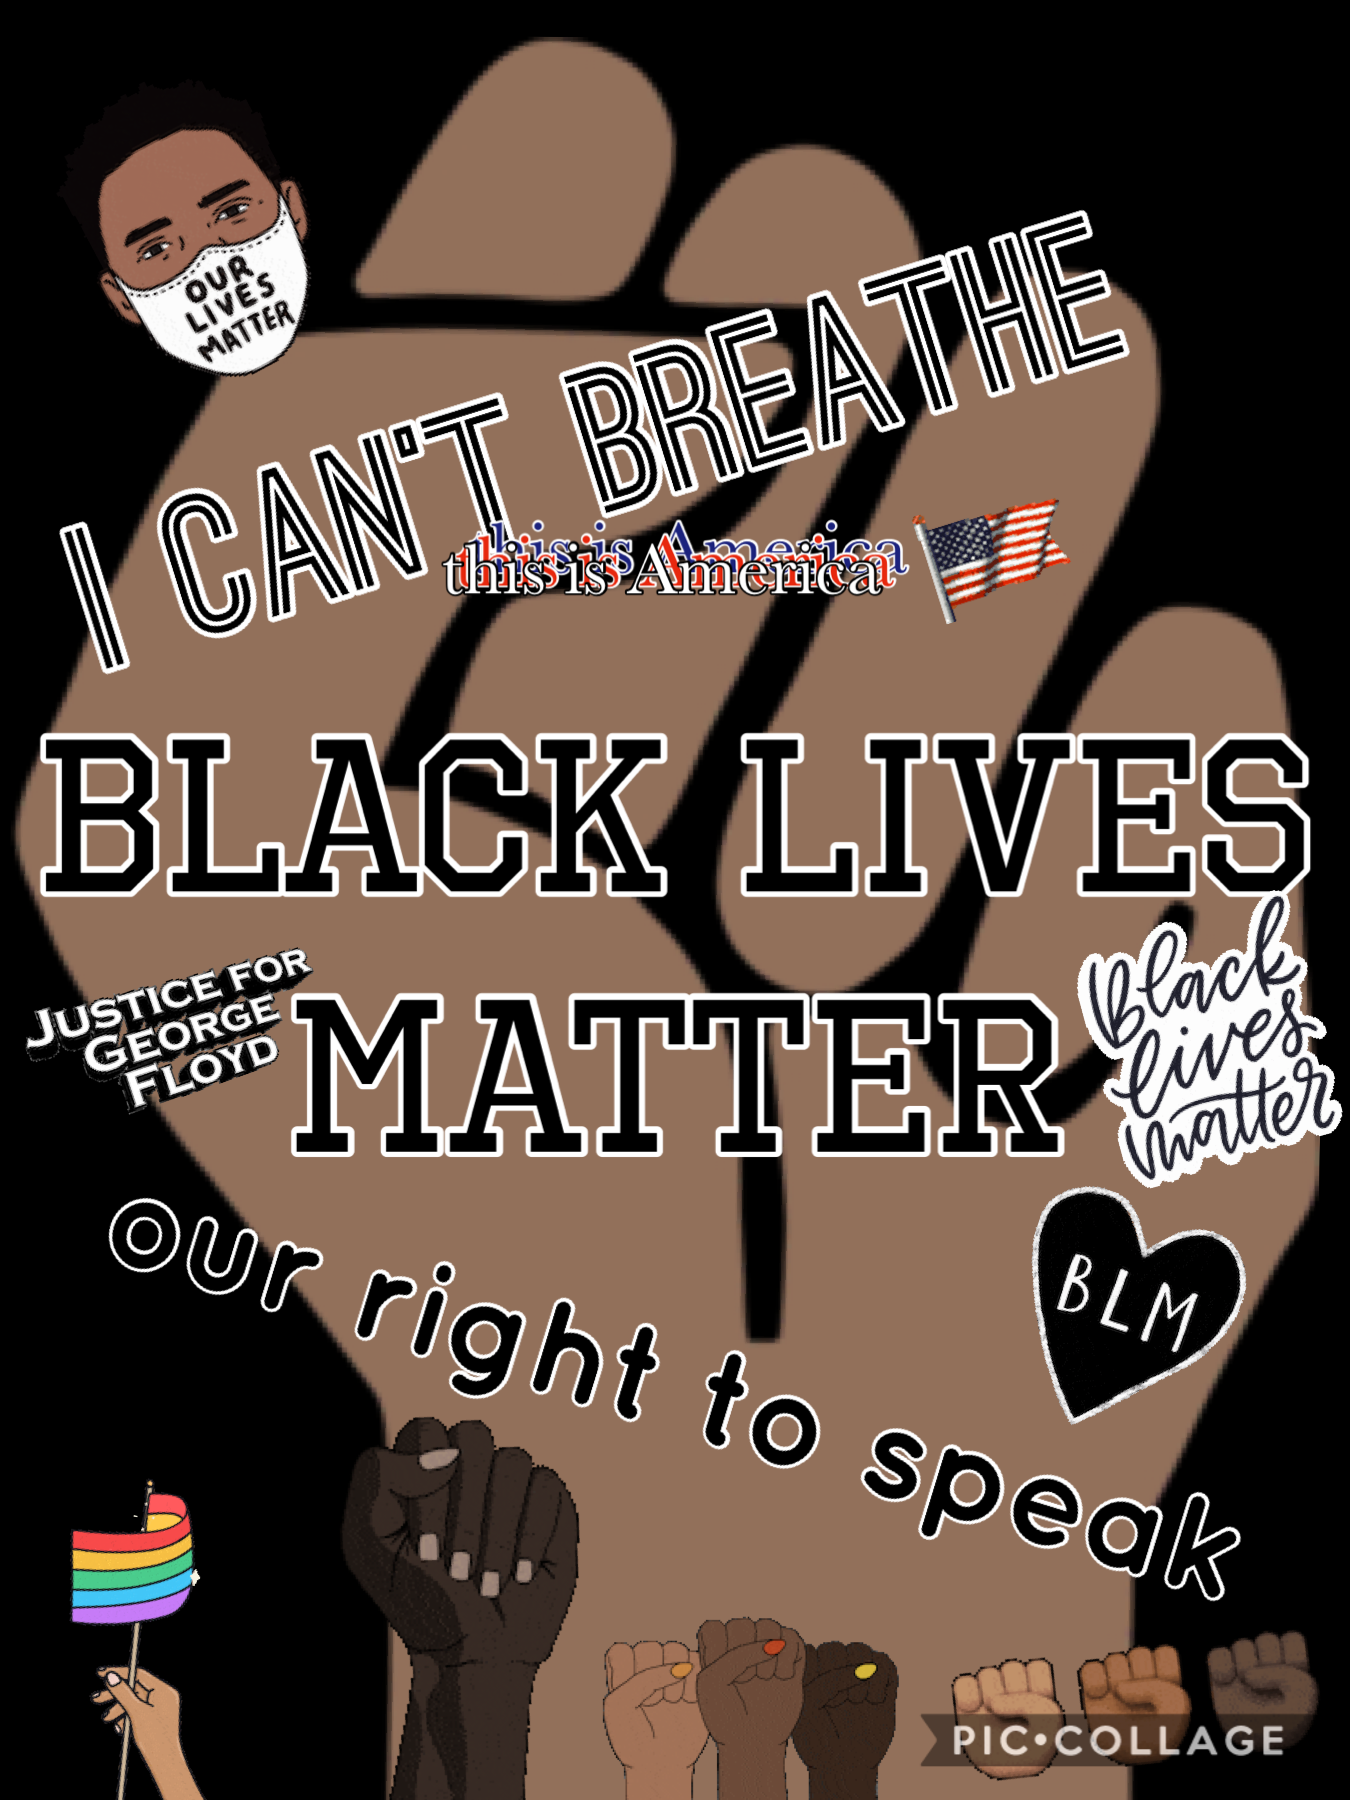 Our community is hurting let’s help it! ✊🏻✊🏼✊🏽✊🏾✊🏿#BLACKLIVESMATTER